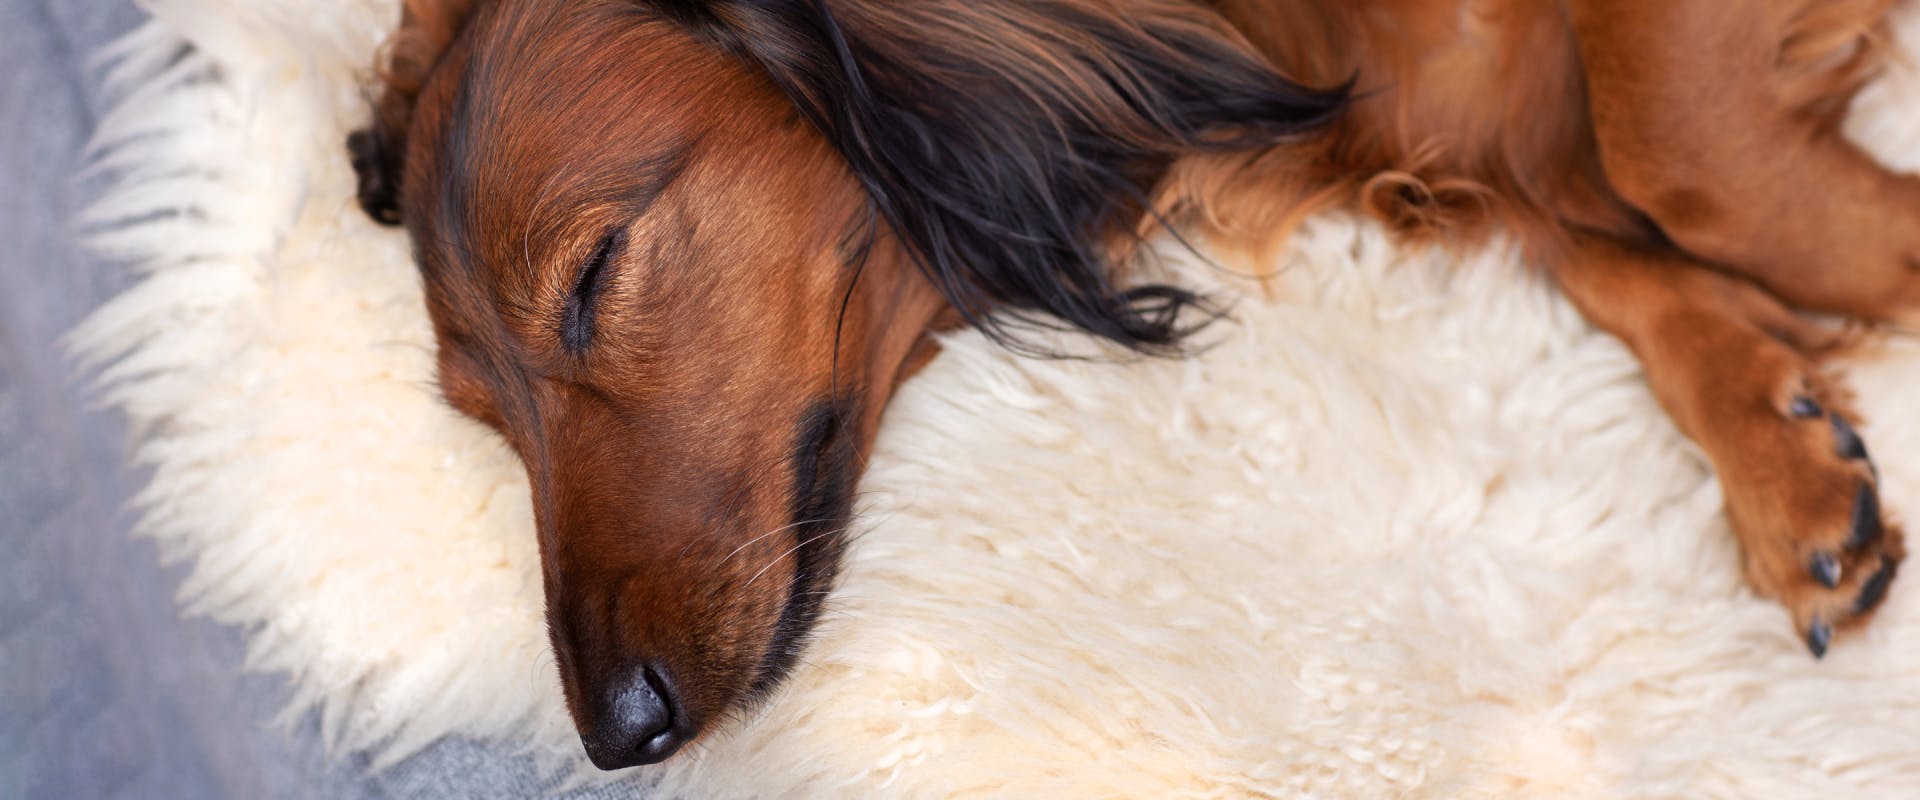 A dog sleeps on a carpet.